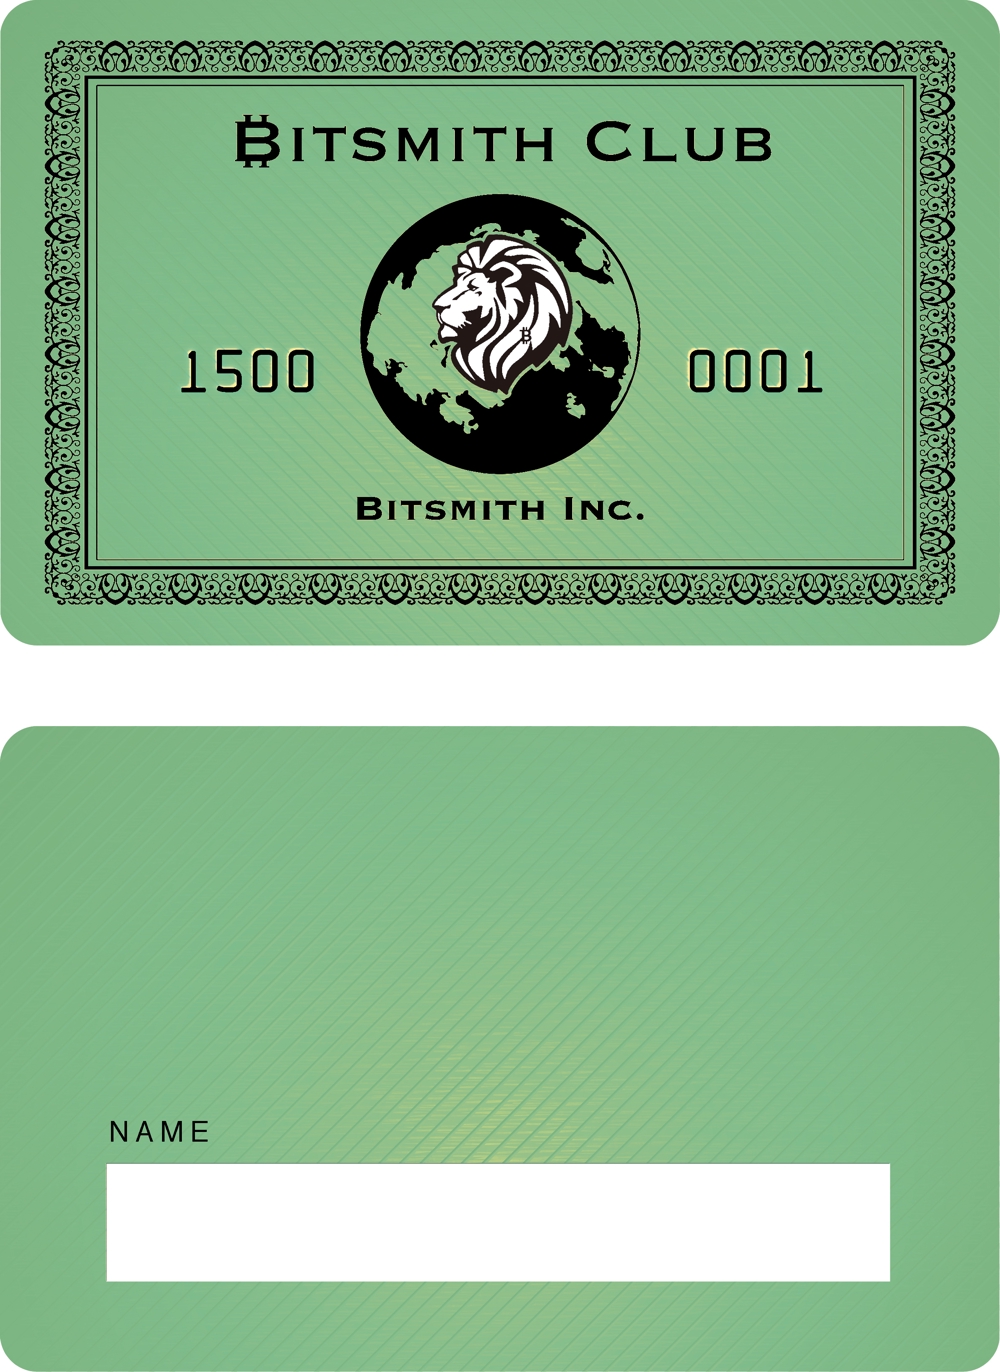 bitsmithclub-card-green.jpg